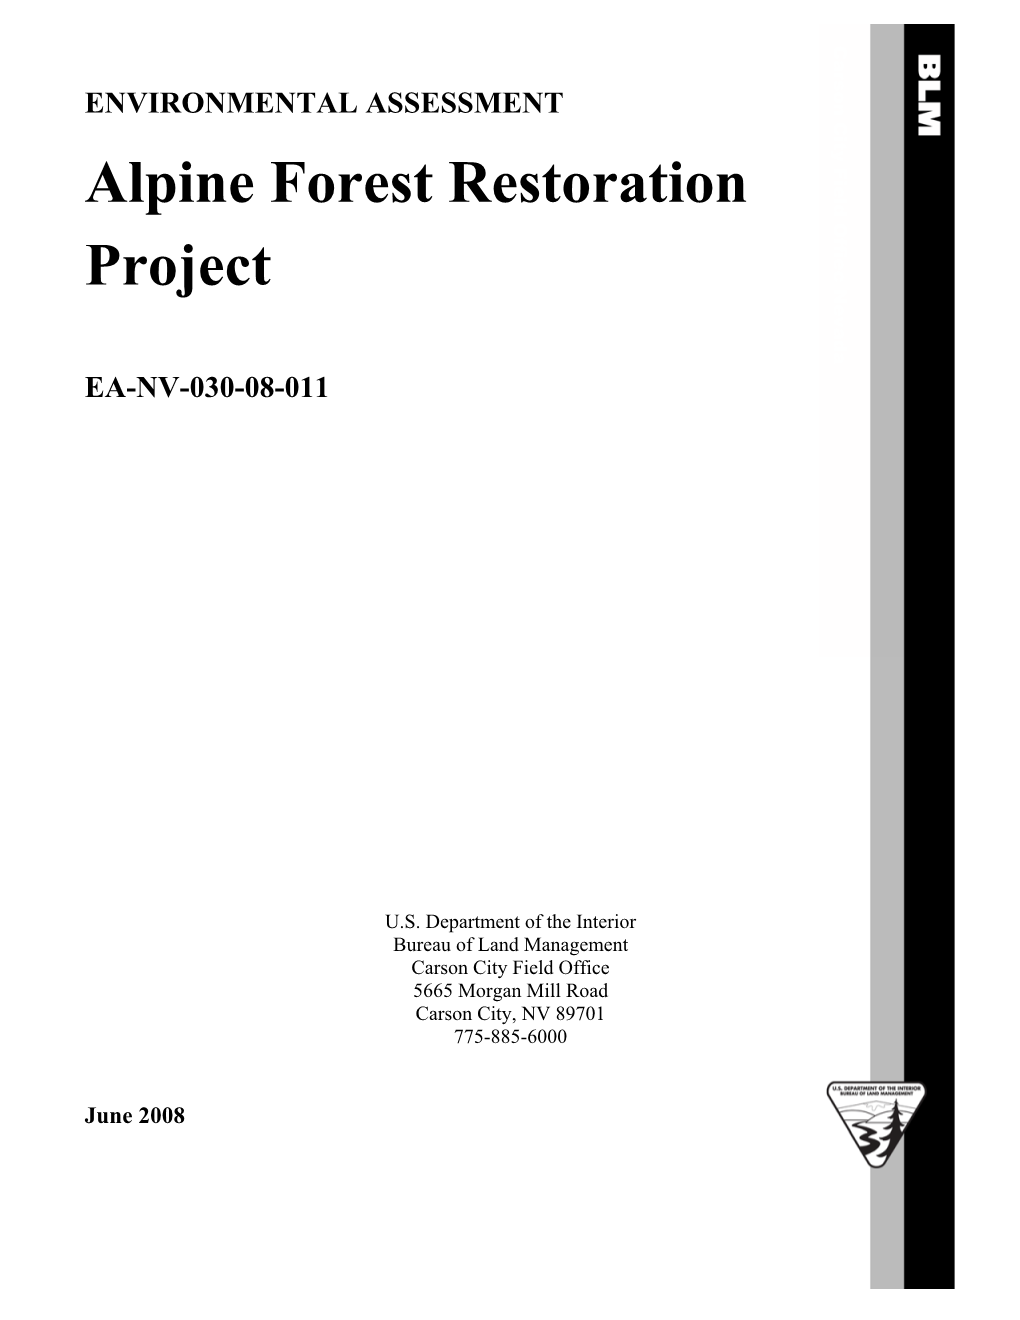 Alpine Forest Restoration Project